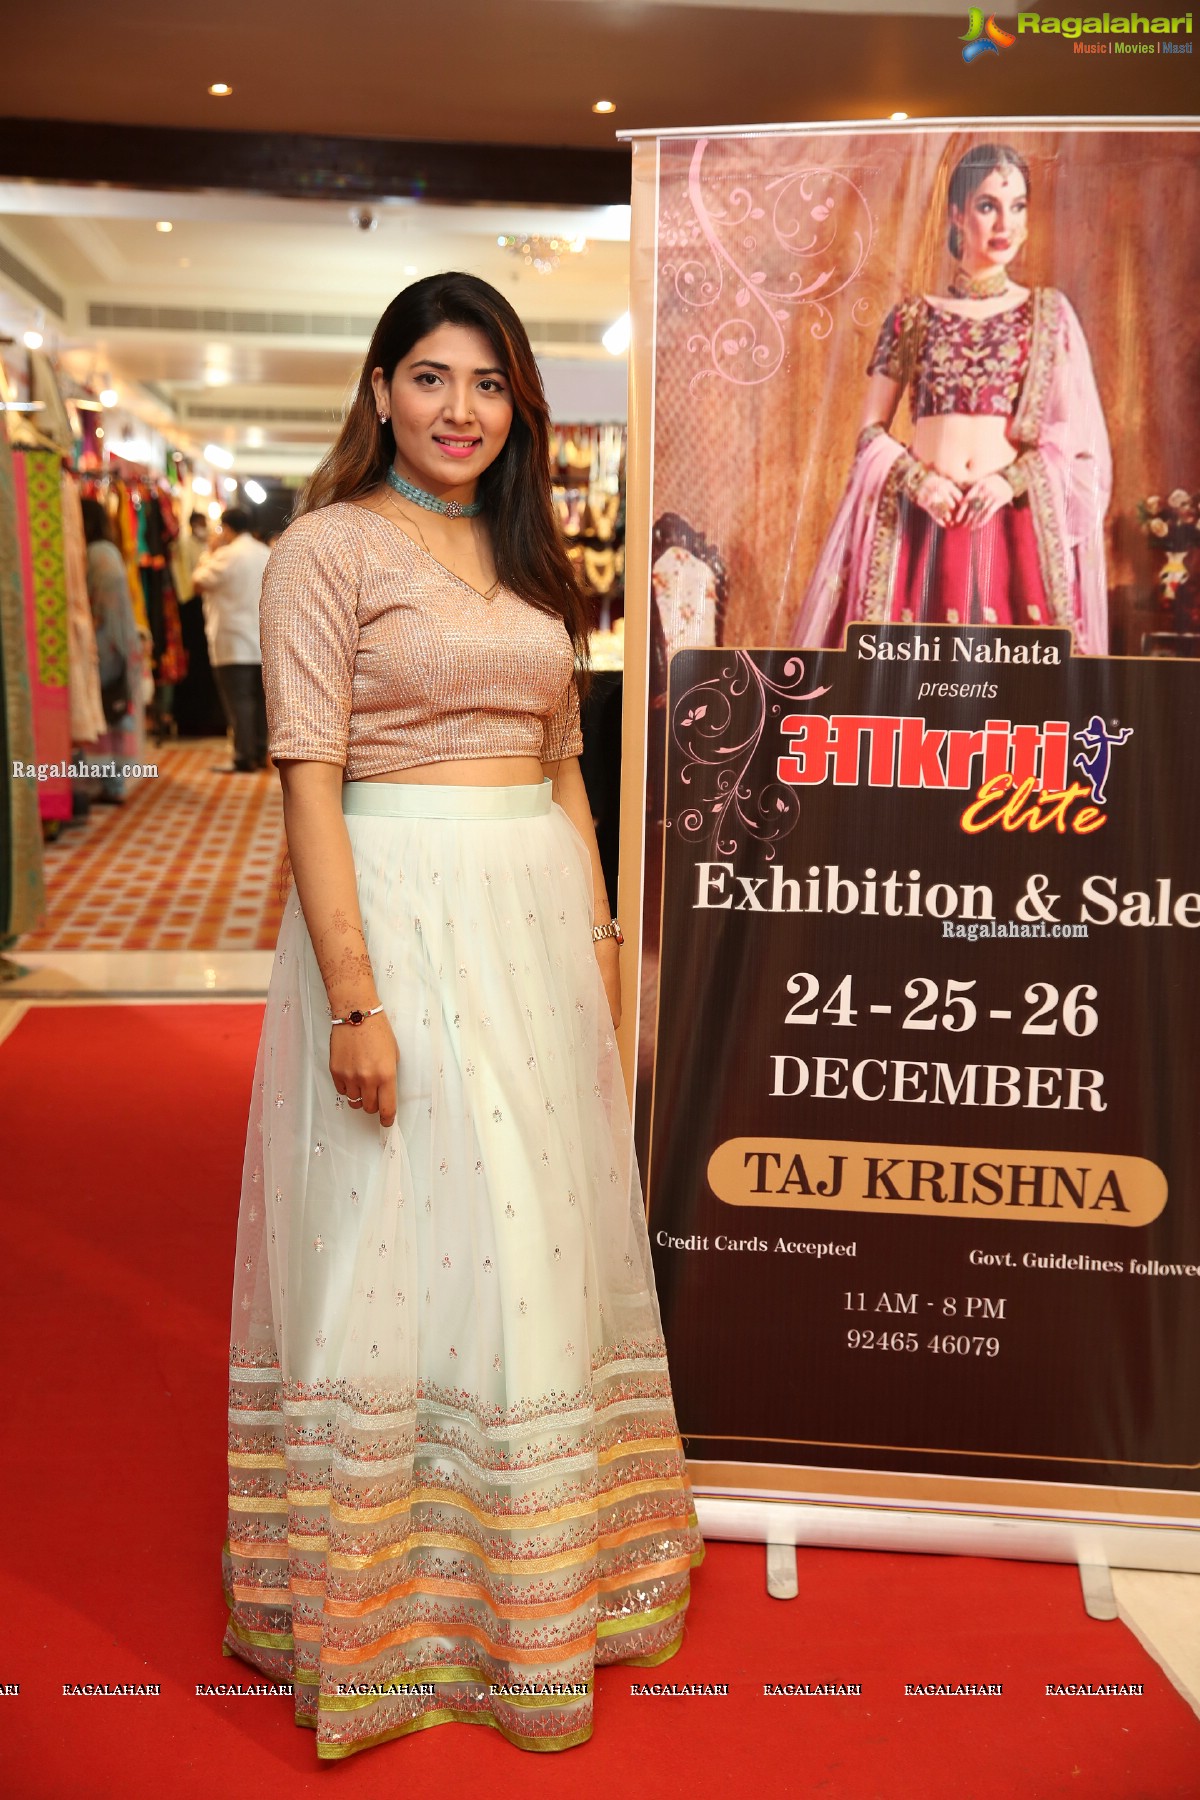 Akriti Elite Exhibition and Sale December 2020 Begins at Taj Krishna